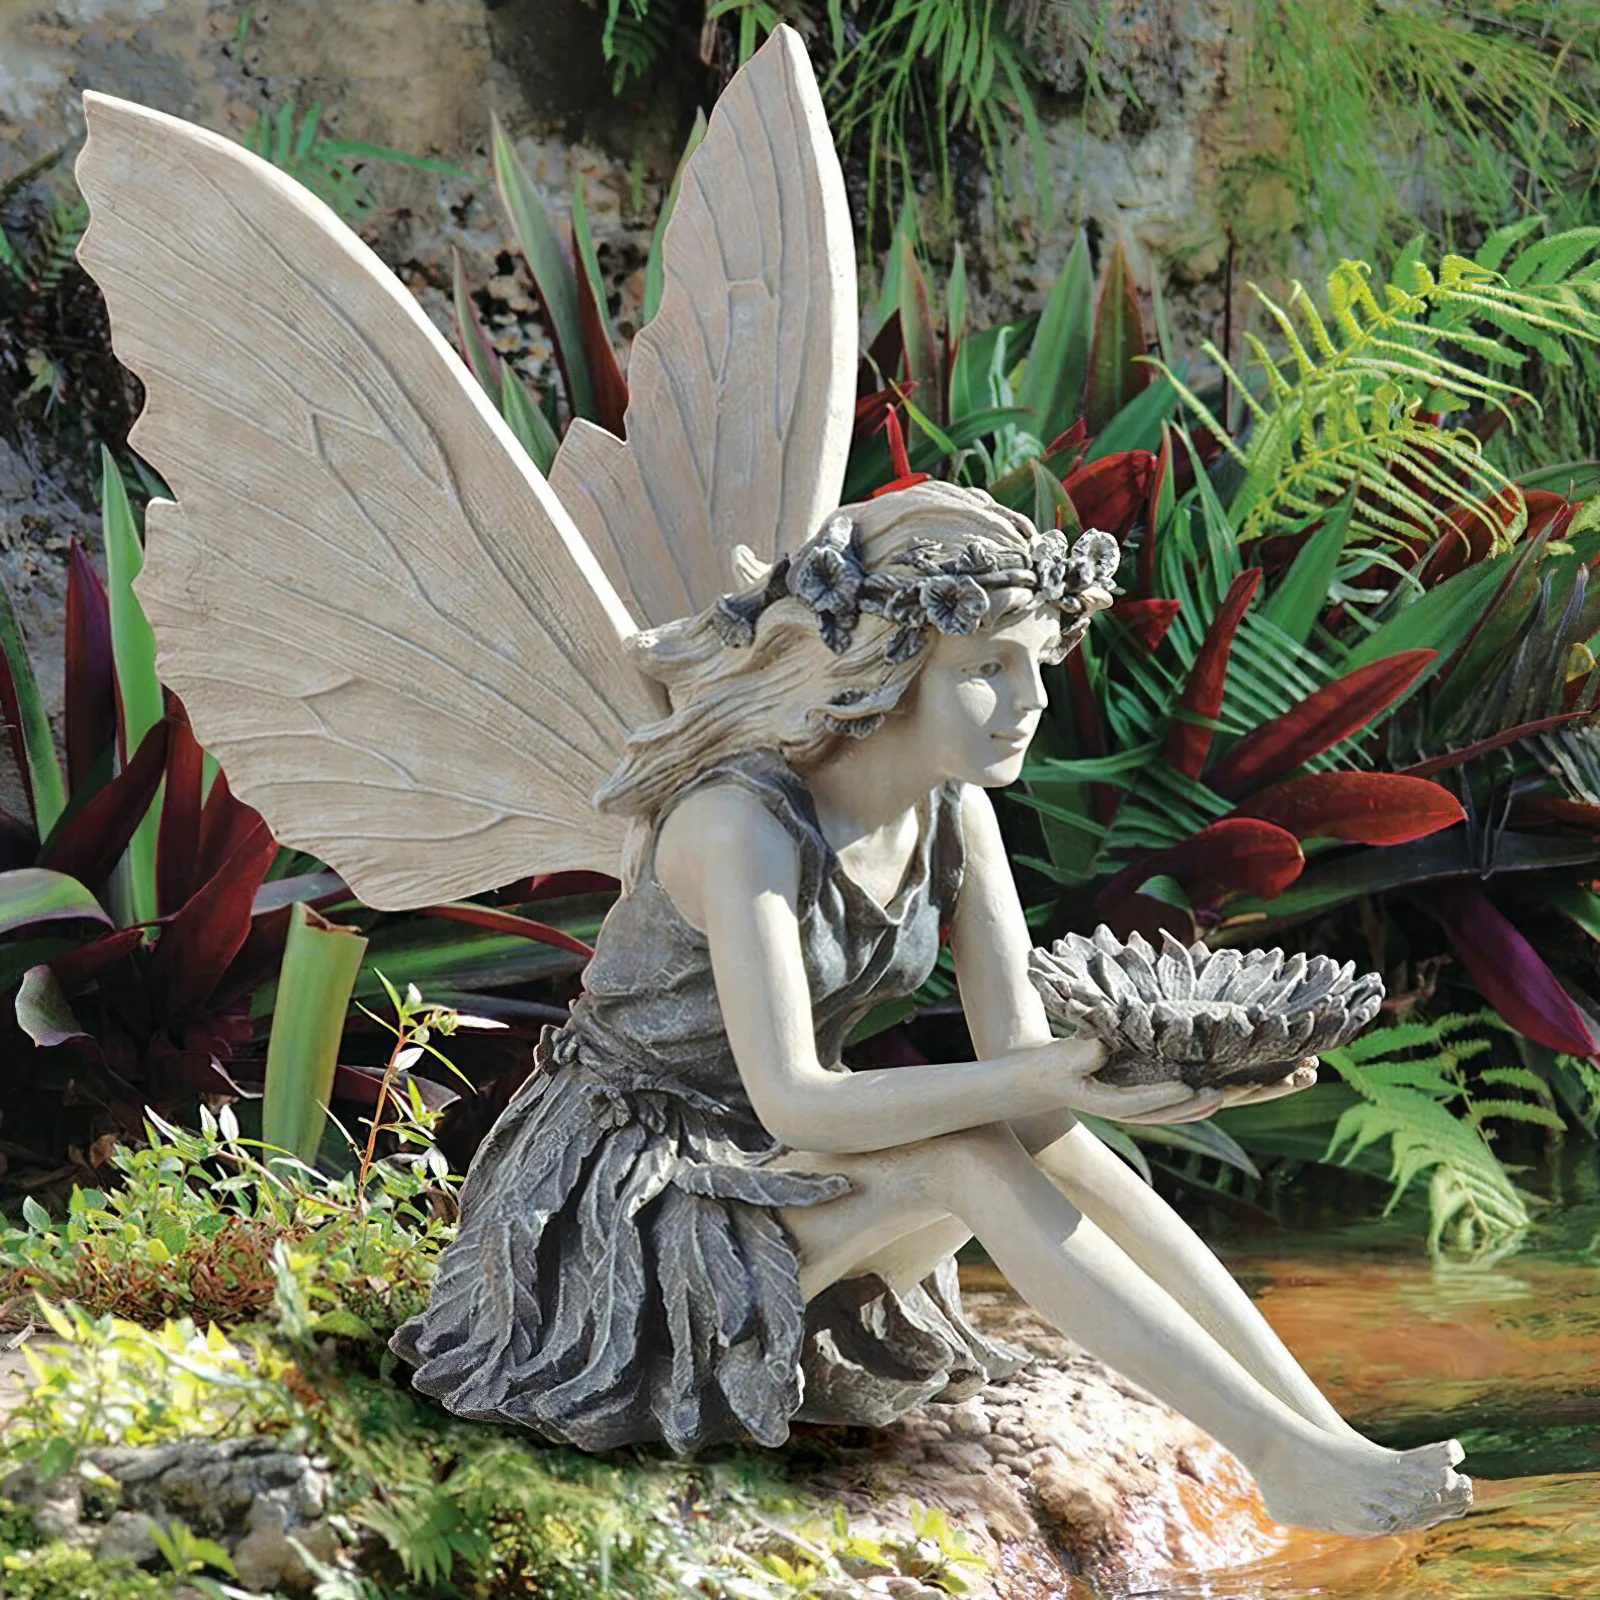 

Sitting Fairy Statue Flower Fairy Sculpture Garden Landscape Yard Art Ornament Resin Sitting Statue Outdoor Figurines Crafts